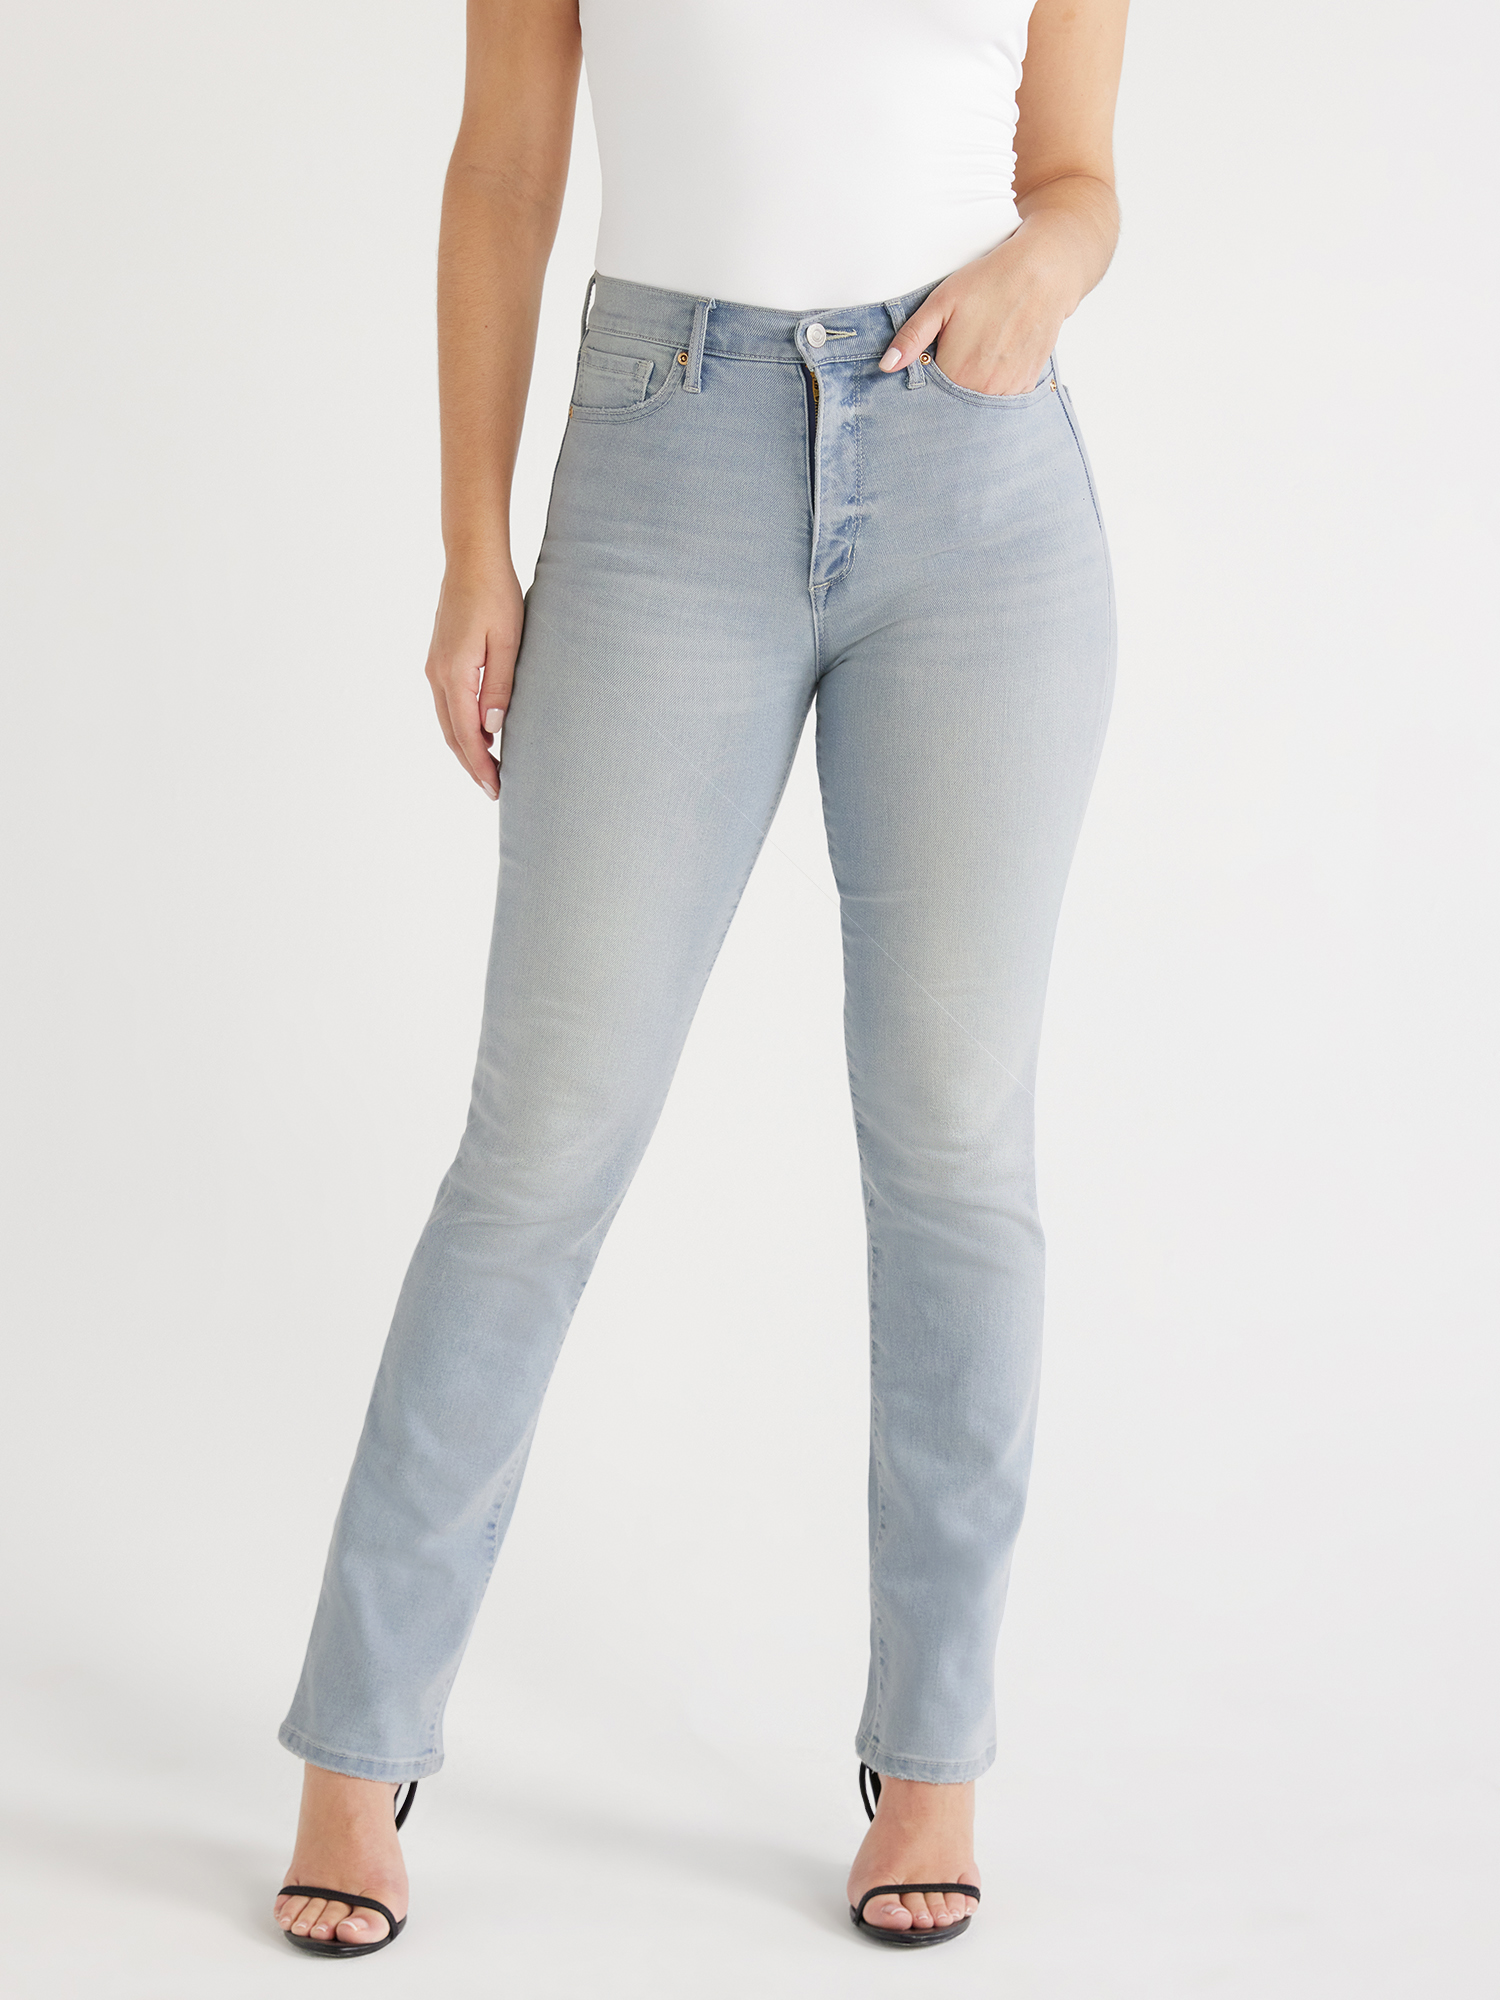 Sofia Jeans Women's Eden Slim Straight Super High-Rise Jeans, 30.5" Inseam, Sizes 0-20